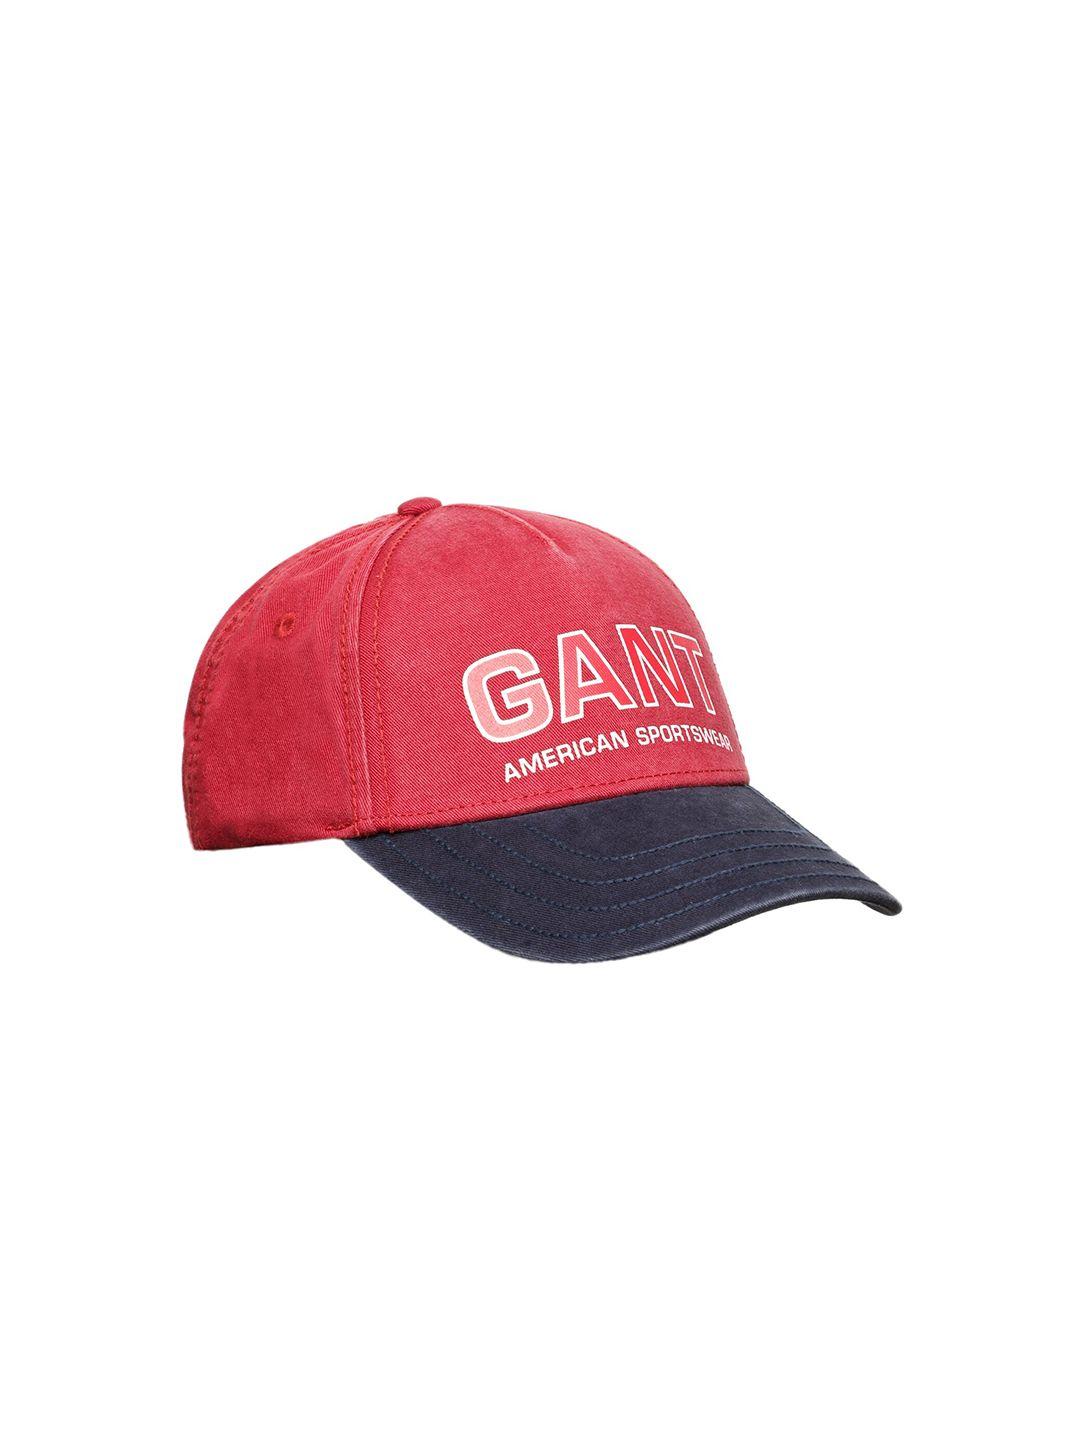 gant men red & navy blue colourblocked baseball cap